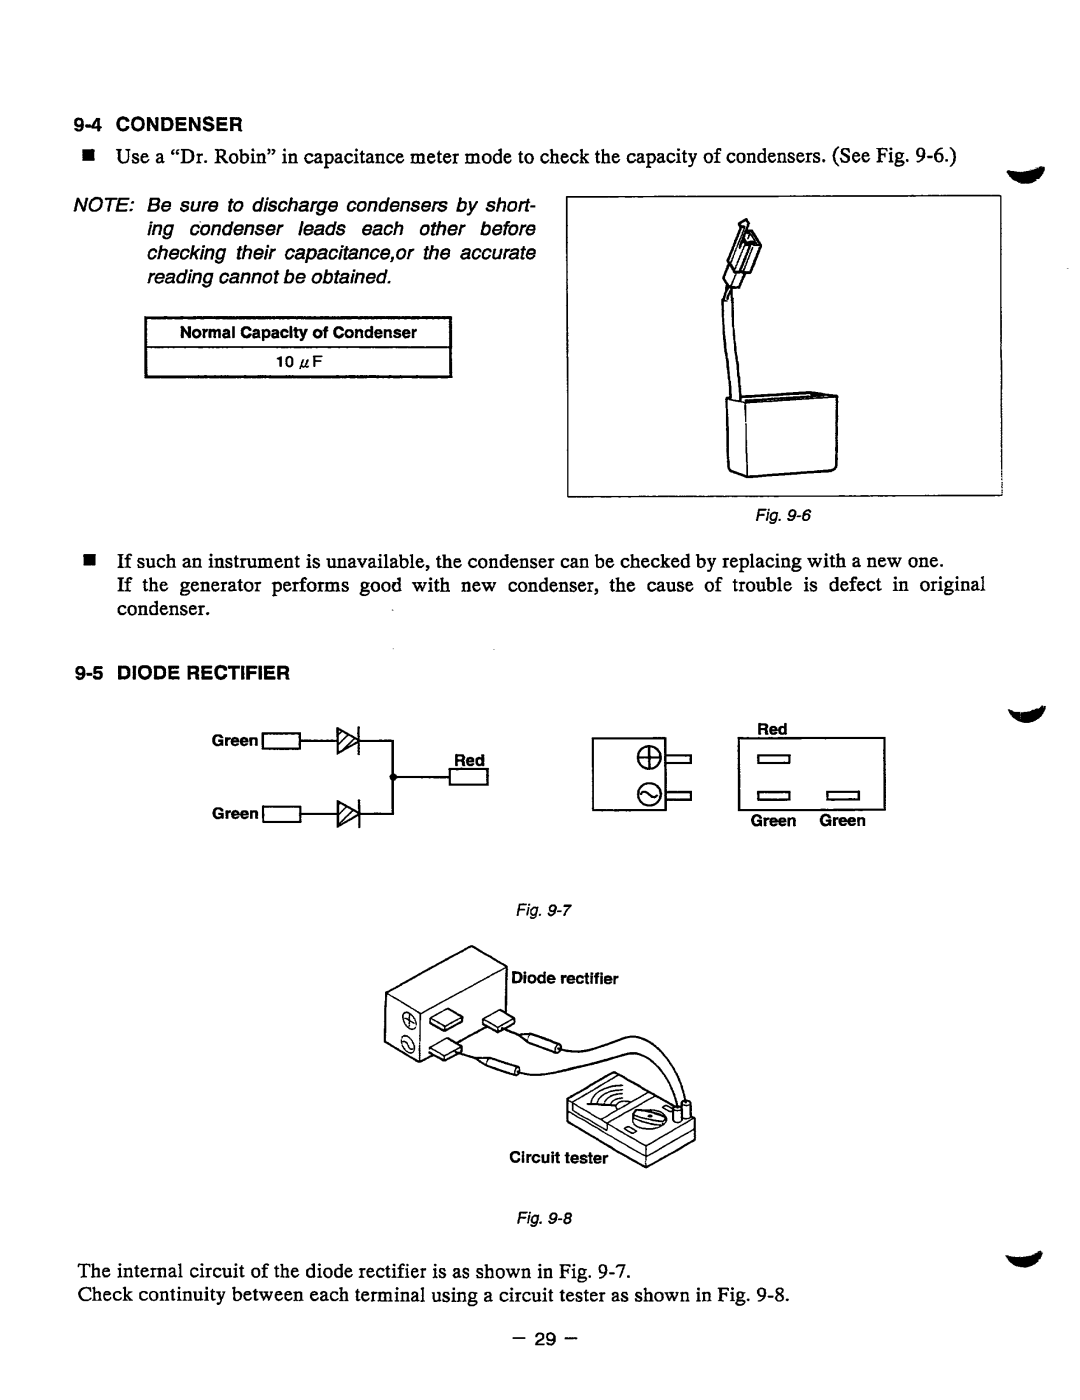 Baldor BALDOR GENERATOR, PC13R manual The internal circuitof the diode rectifieris as shownin Fig 